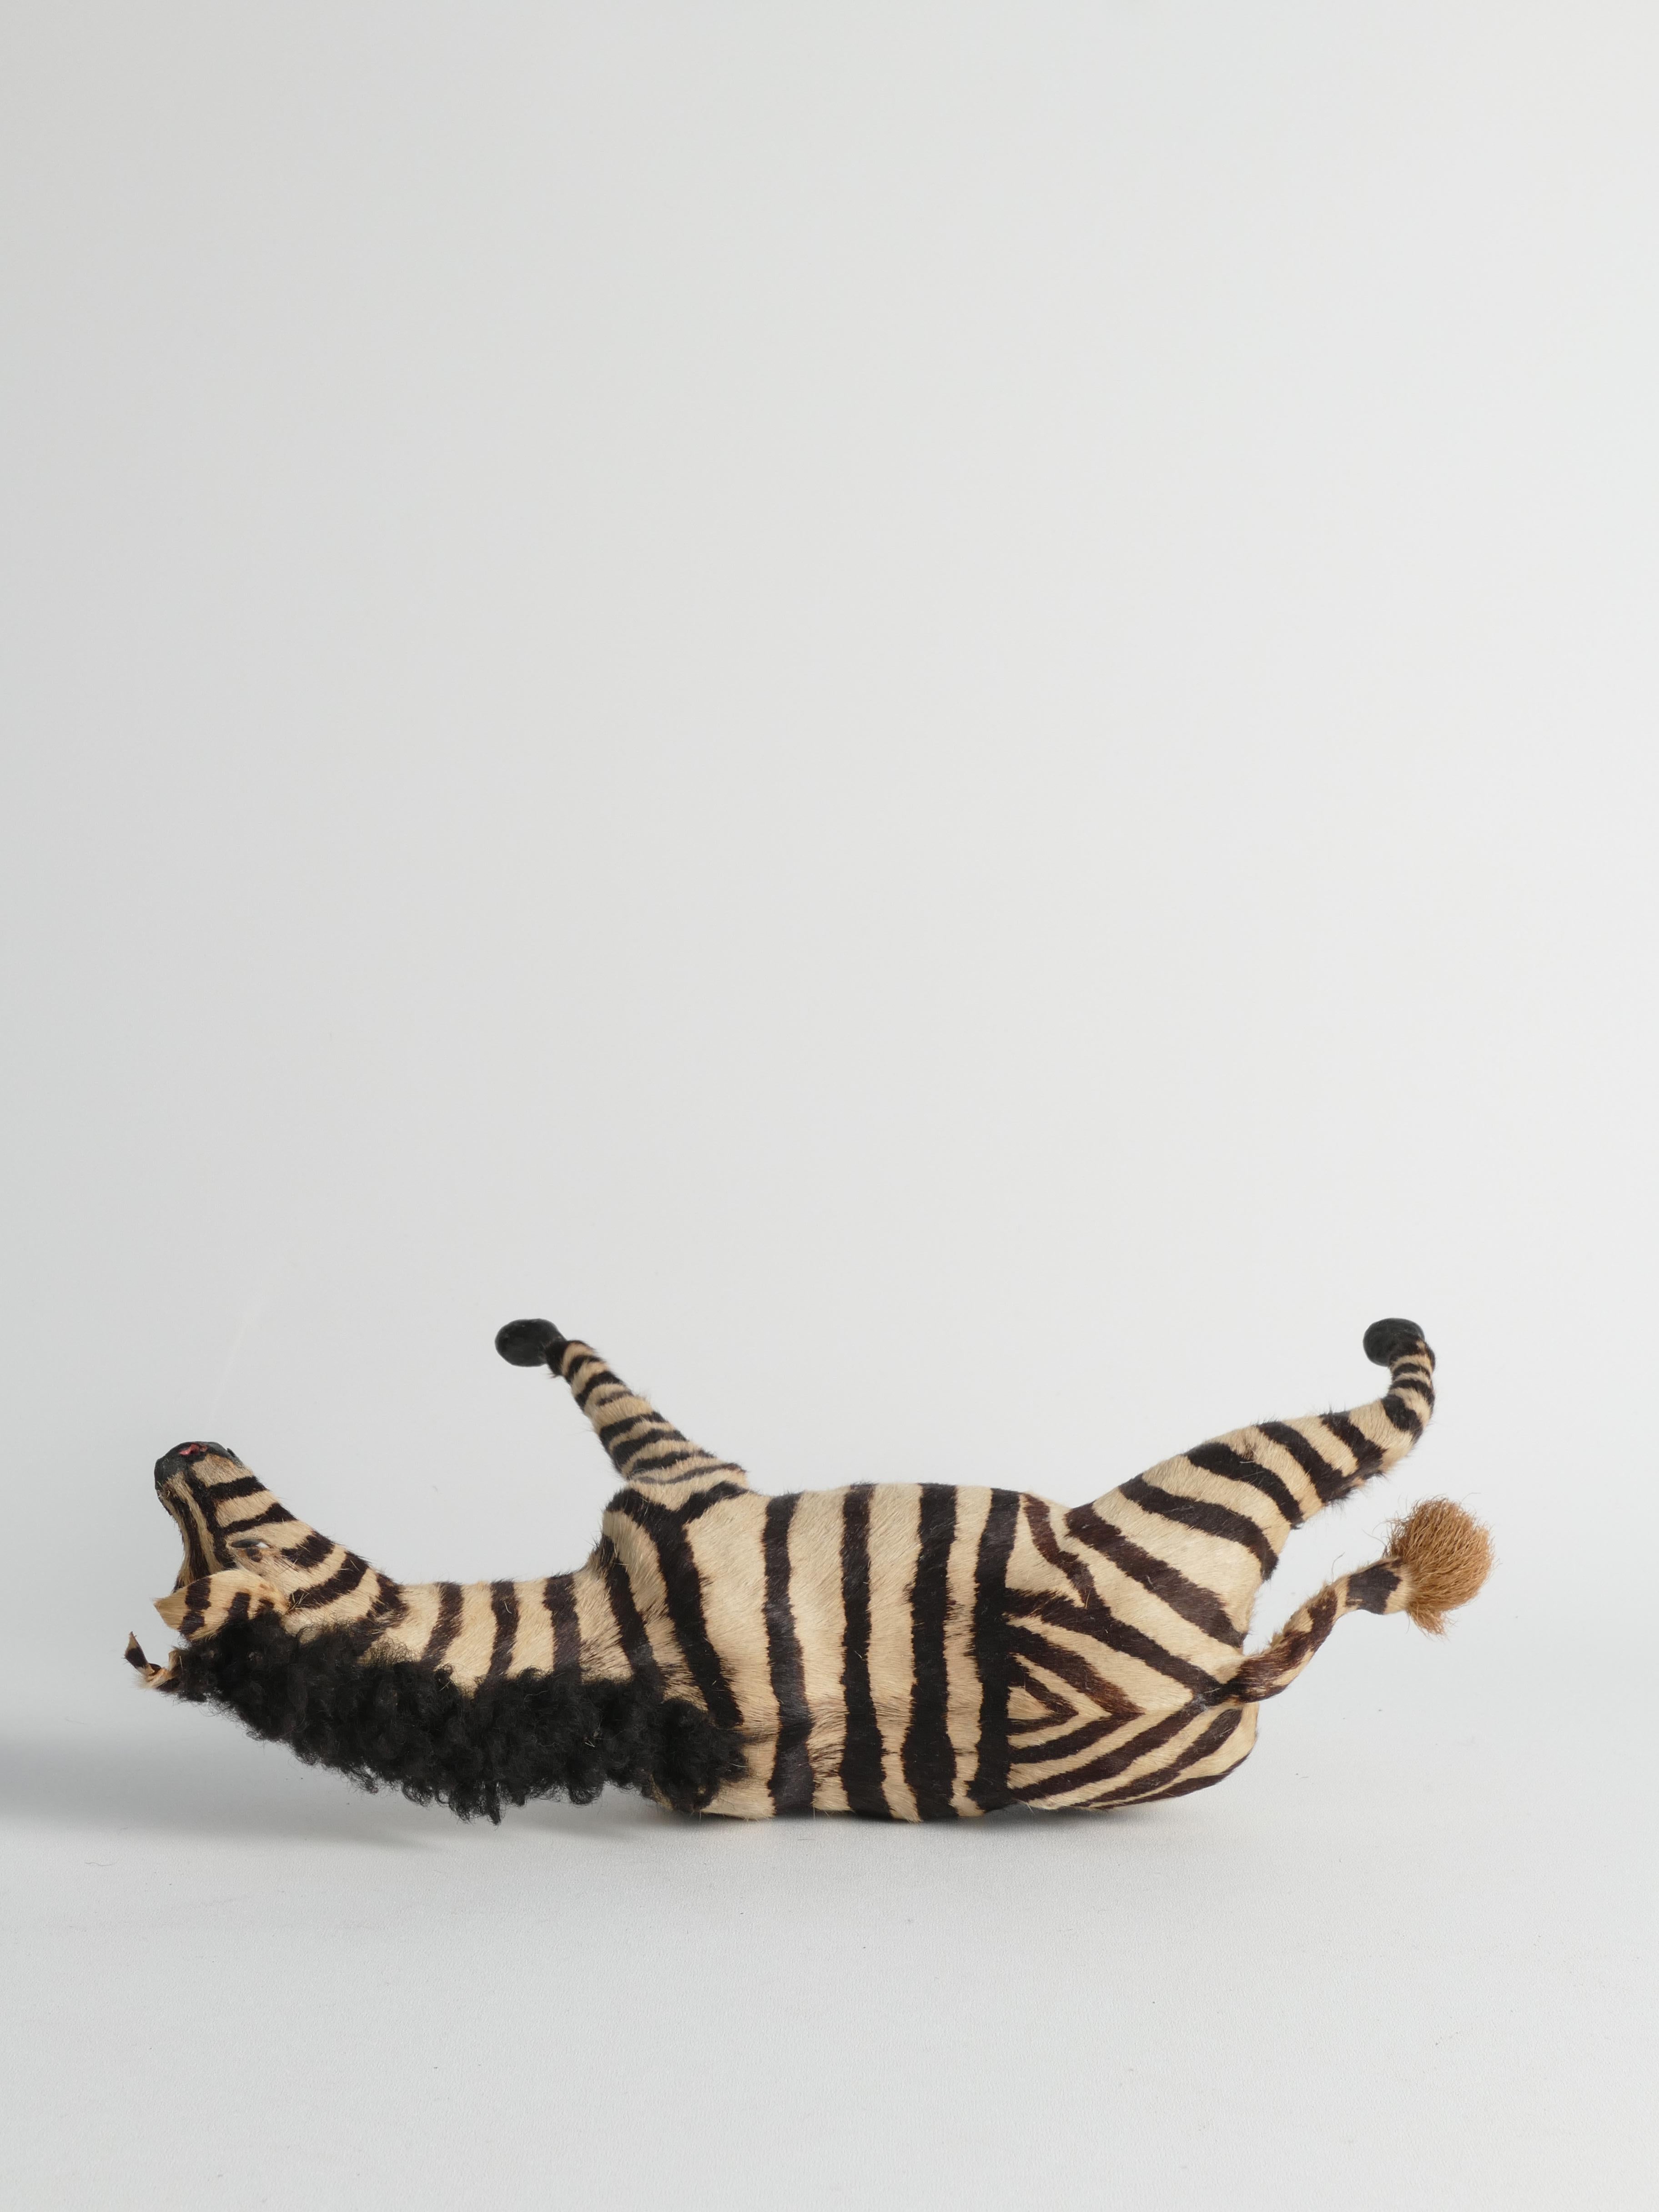 Early 20th Century Zebra Figurine For Sale 11